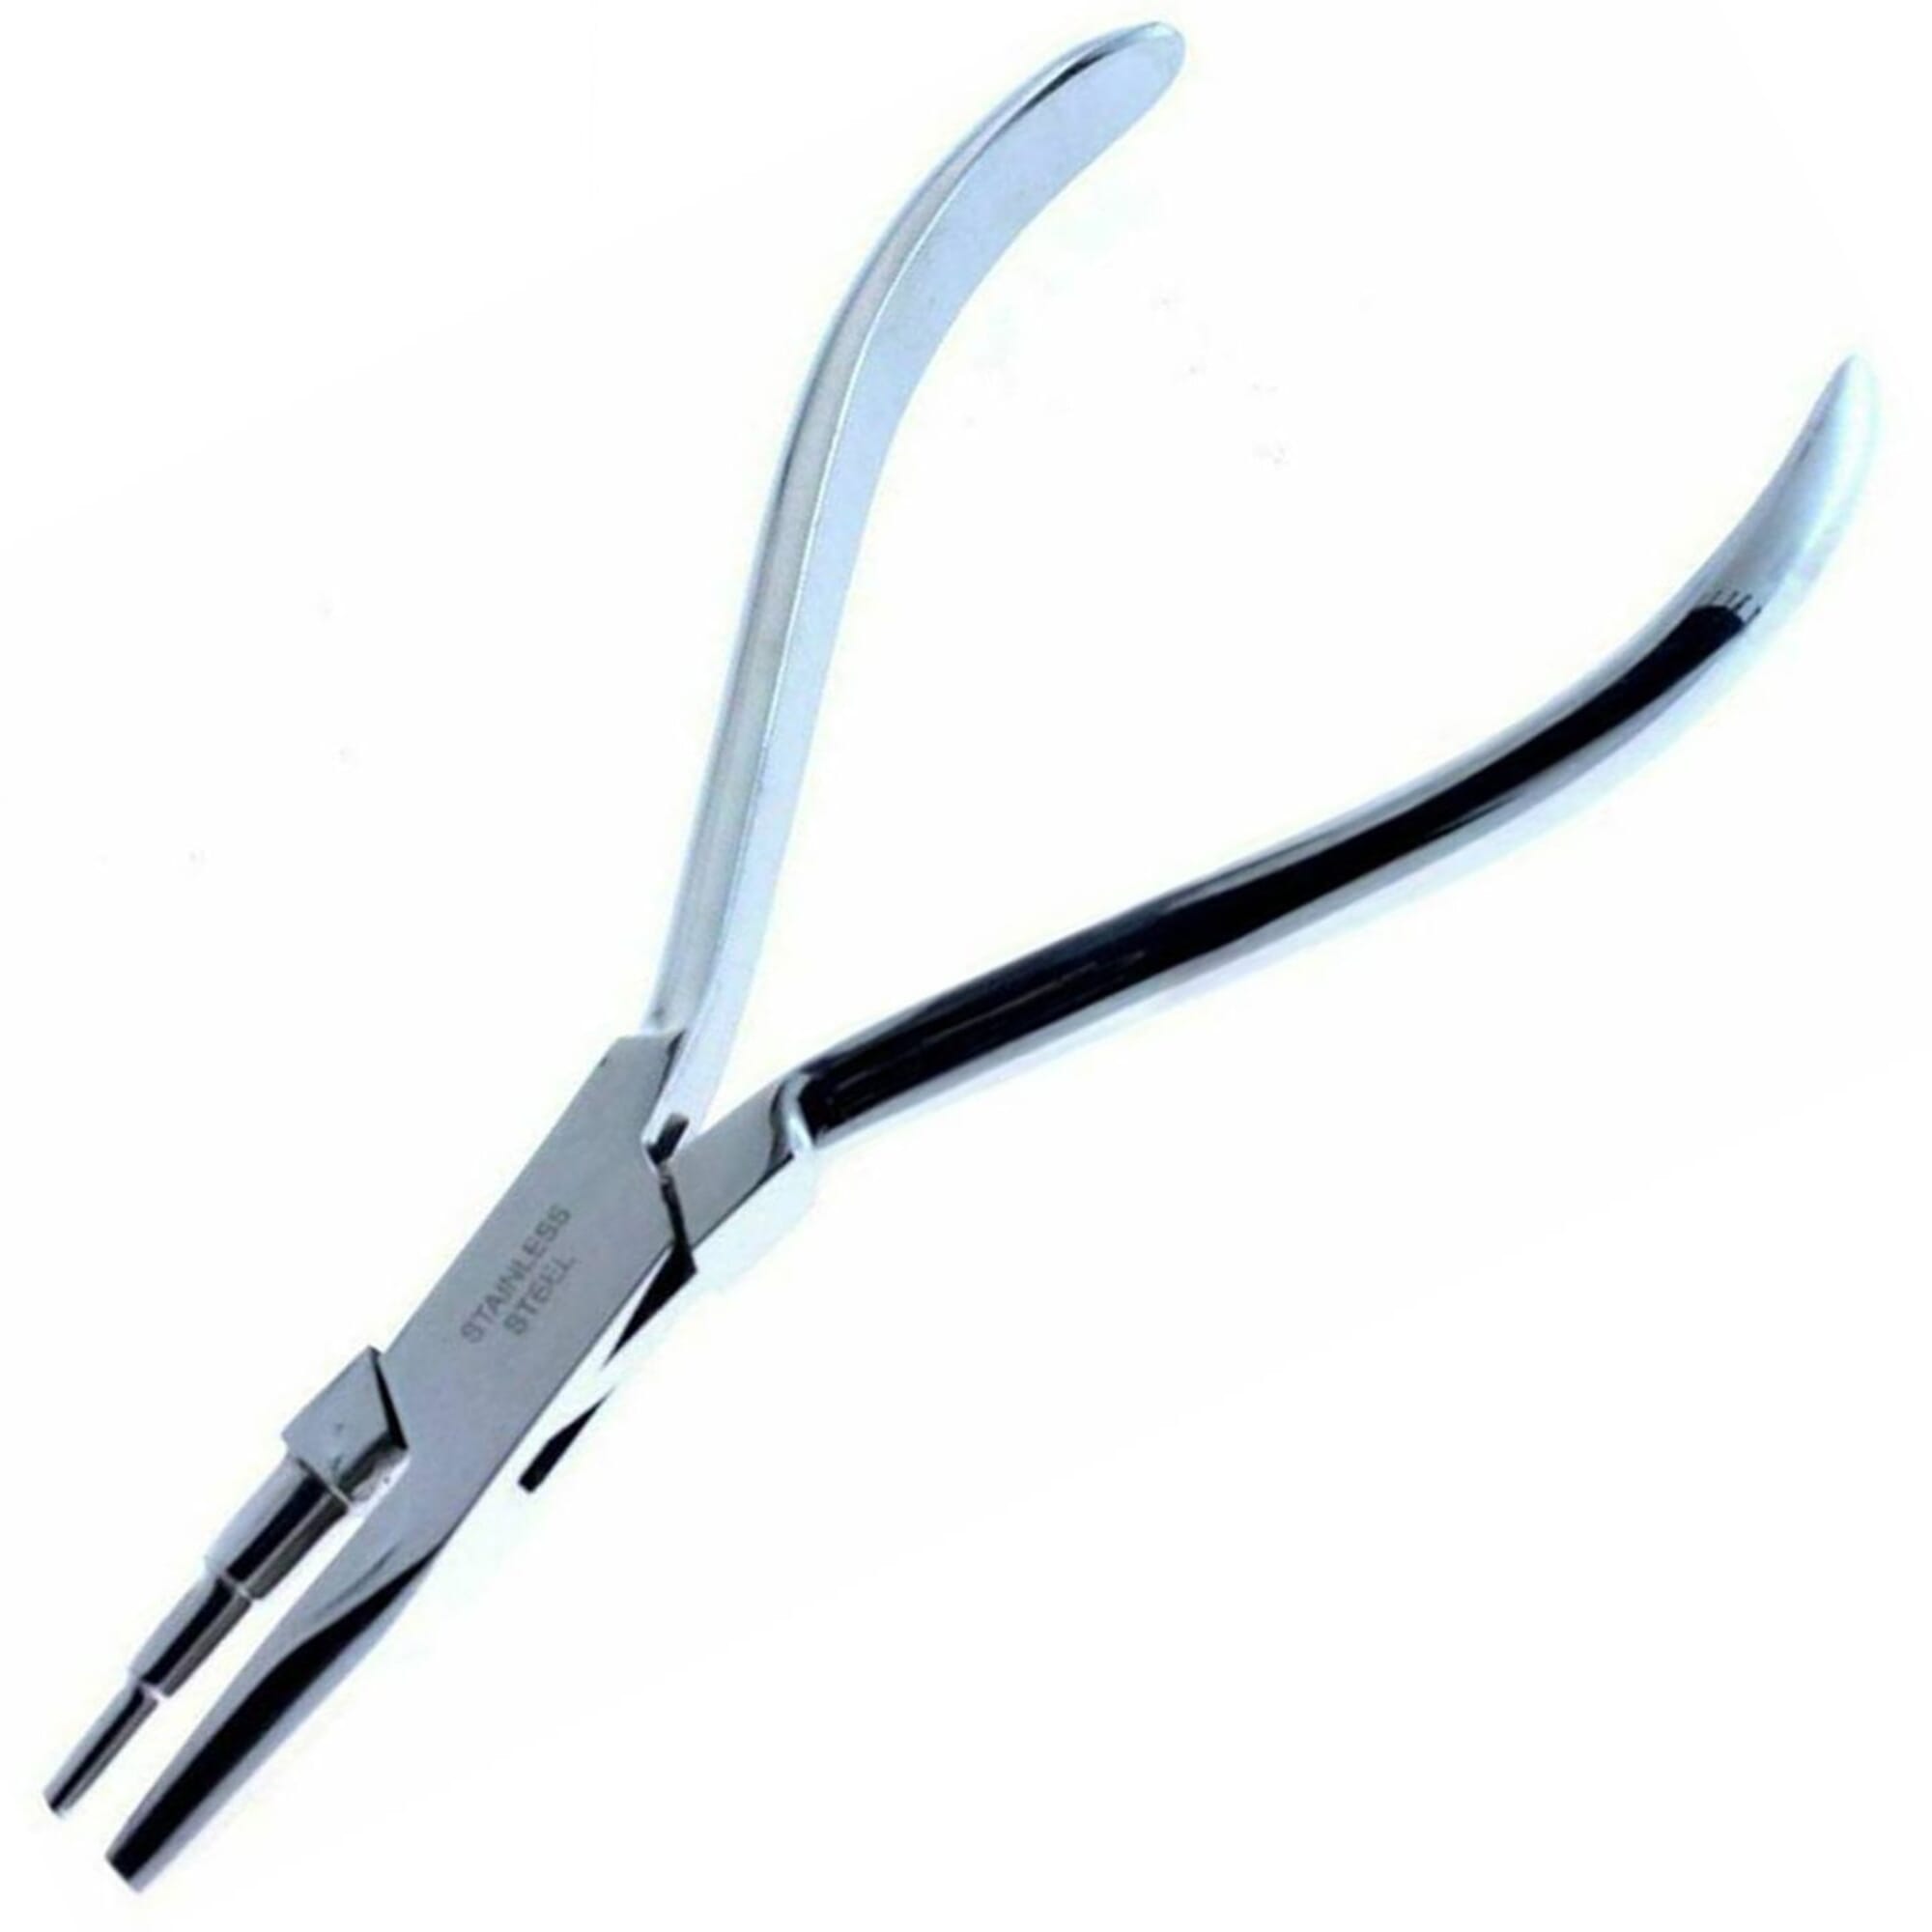 Hayashi Hamono Allex SH-5 Multi Purpose Cutting Tool Straight Blade Scissors 5.5cm Heavy Duty Metal Shears, with Metal Roller Spring